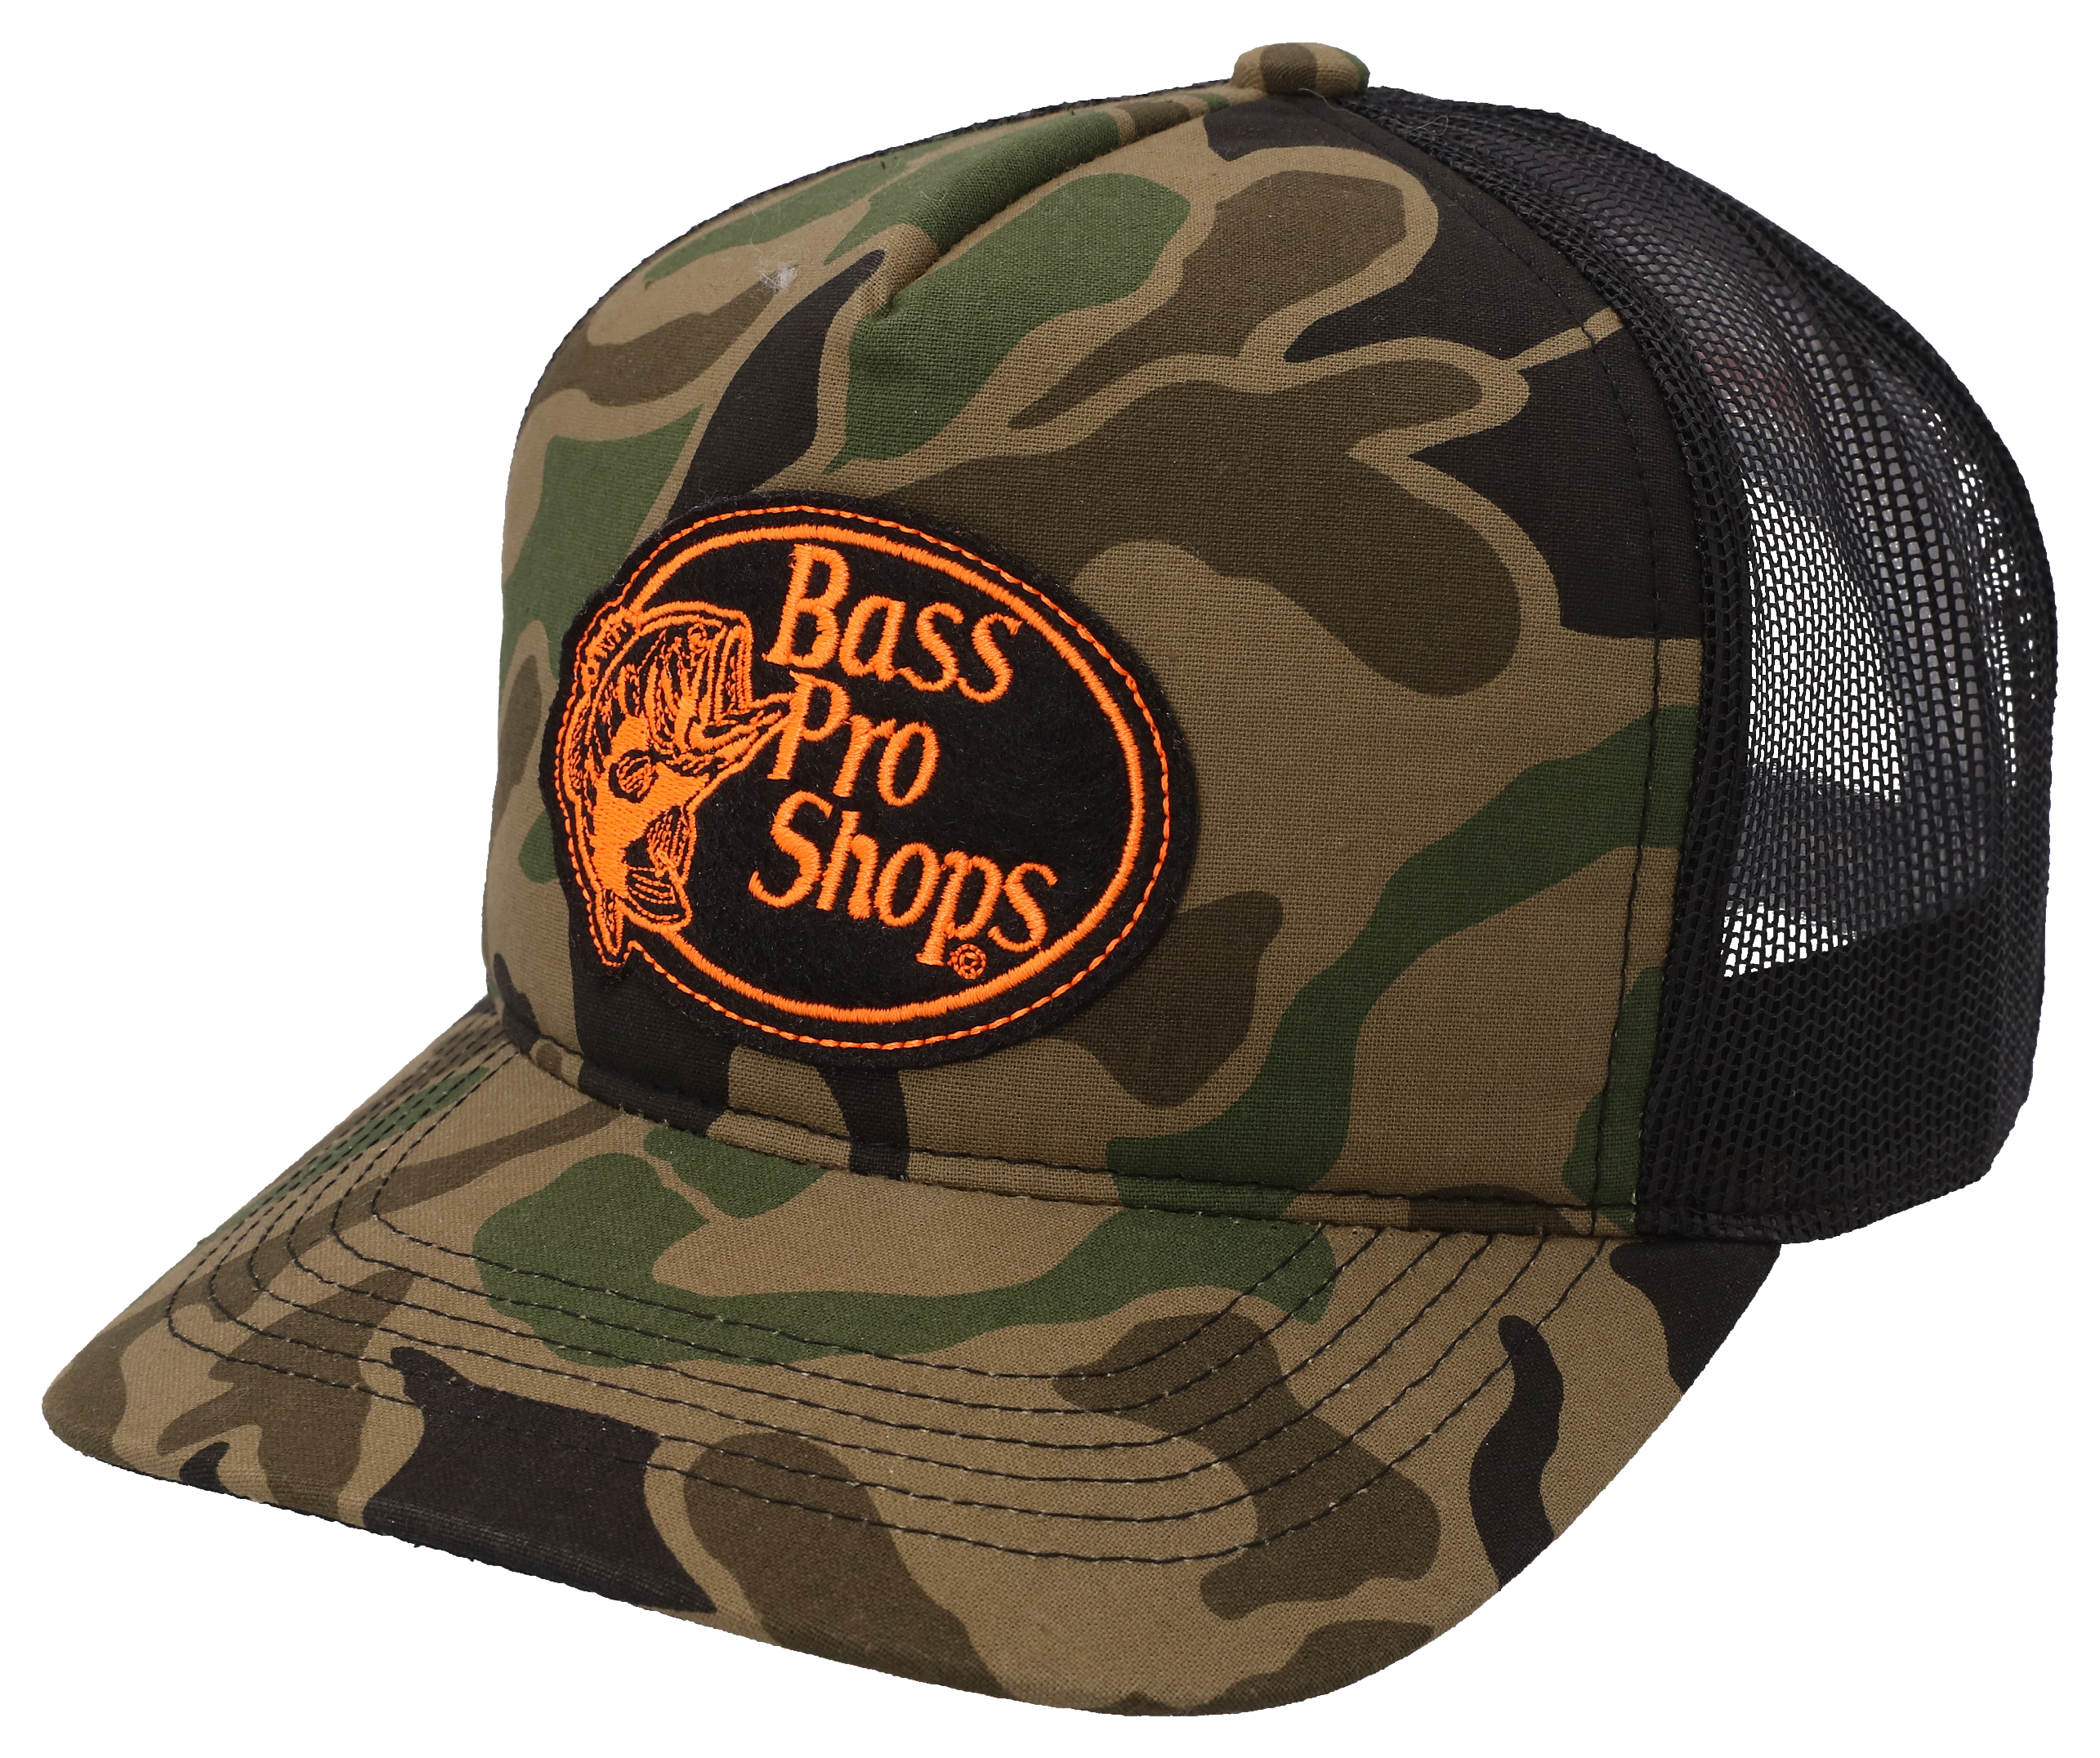 moobom Bass Pro Shops Hat Mesh Adjustable SnapBack Trucker Baseball Fishing  Outdoor Cap 